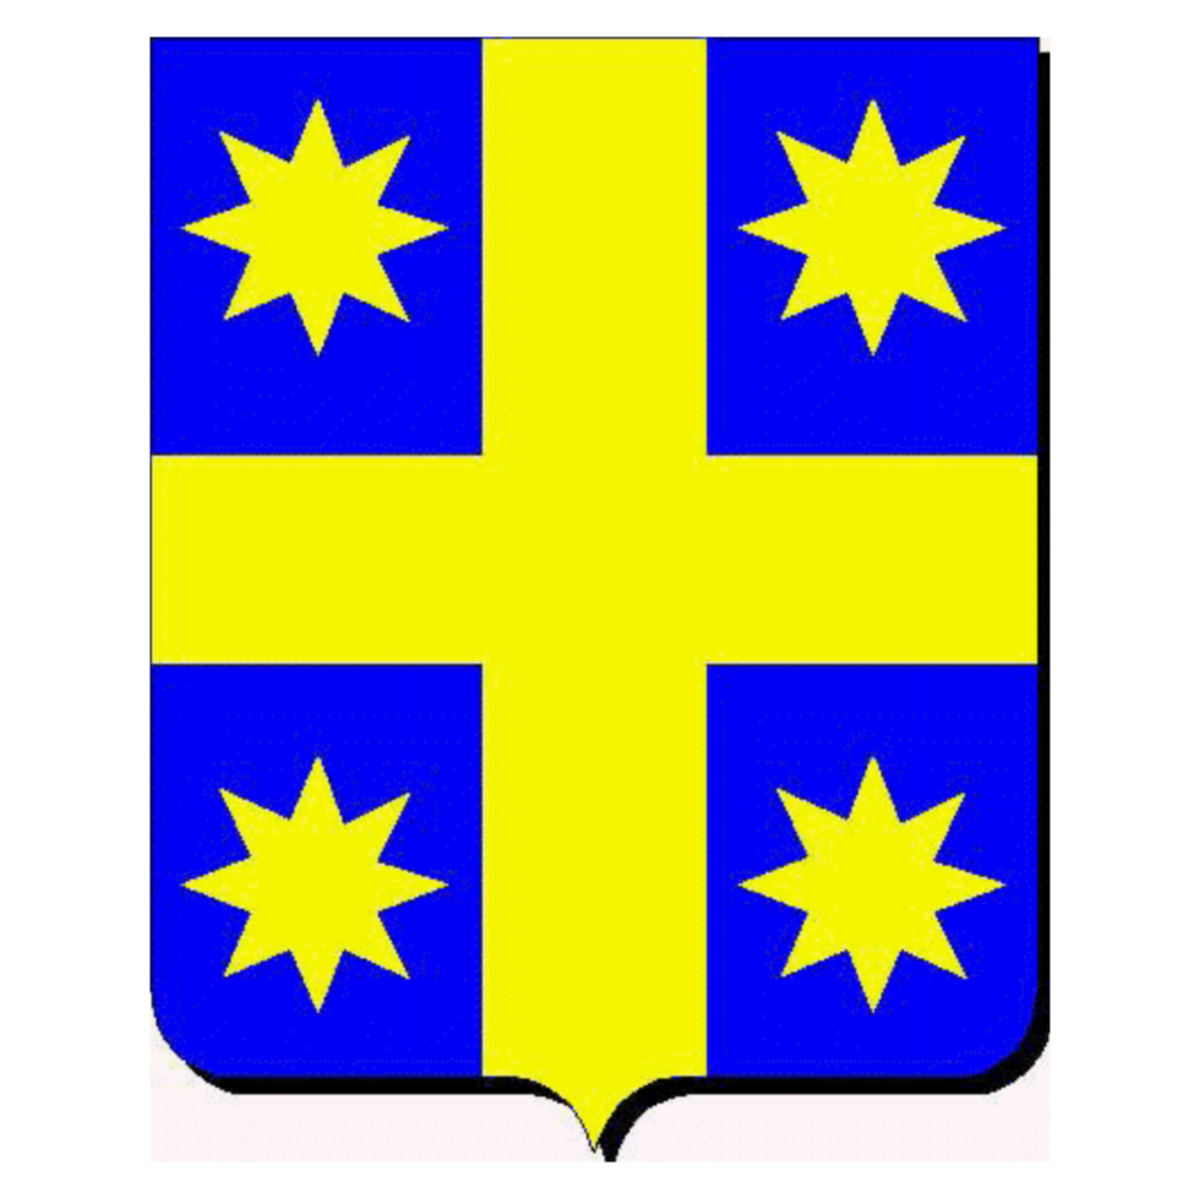 Coat of arms of familyTrías